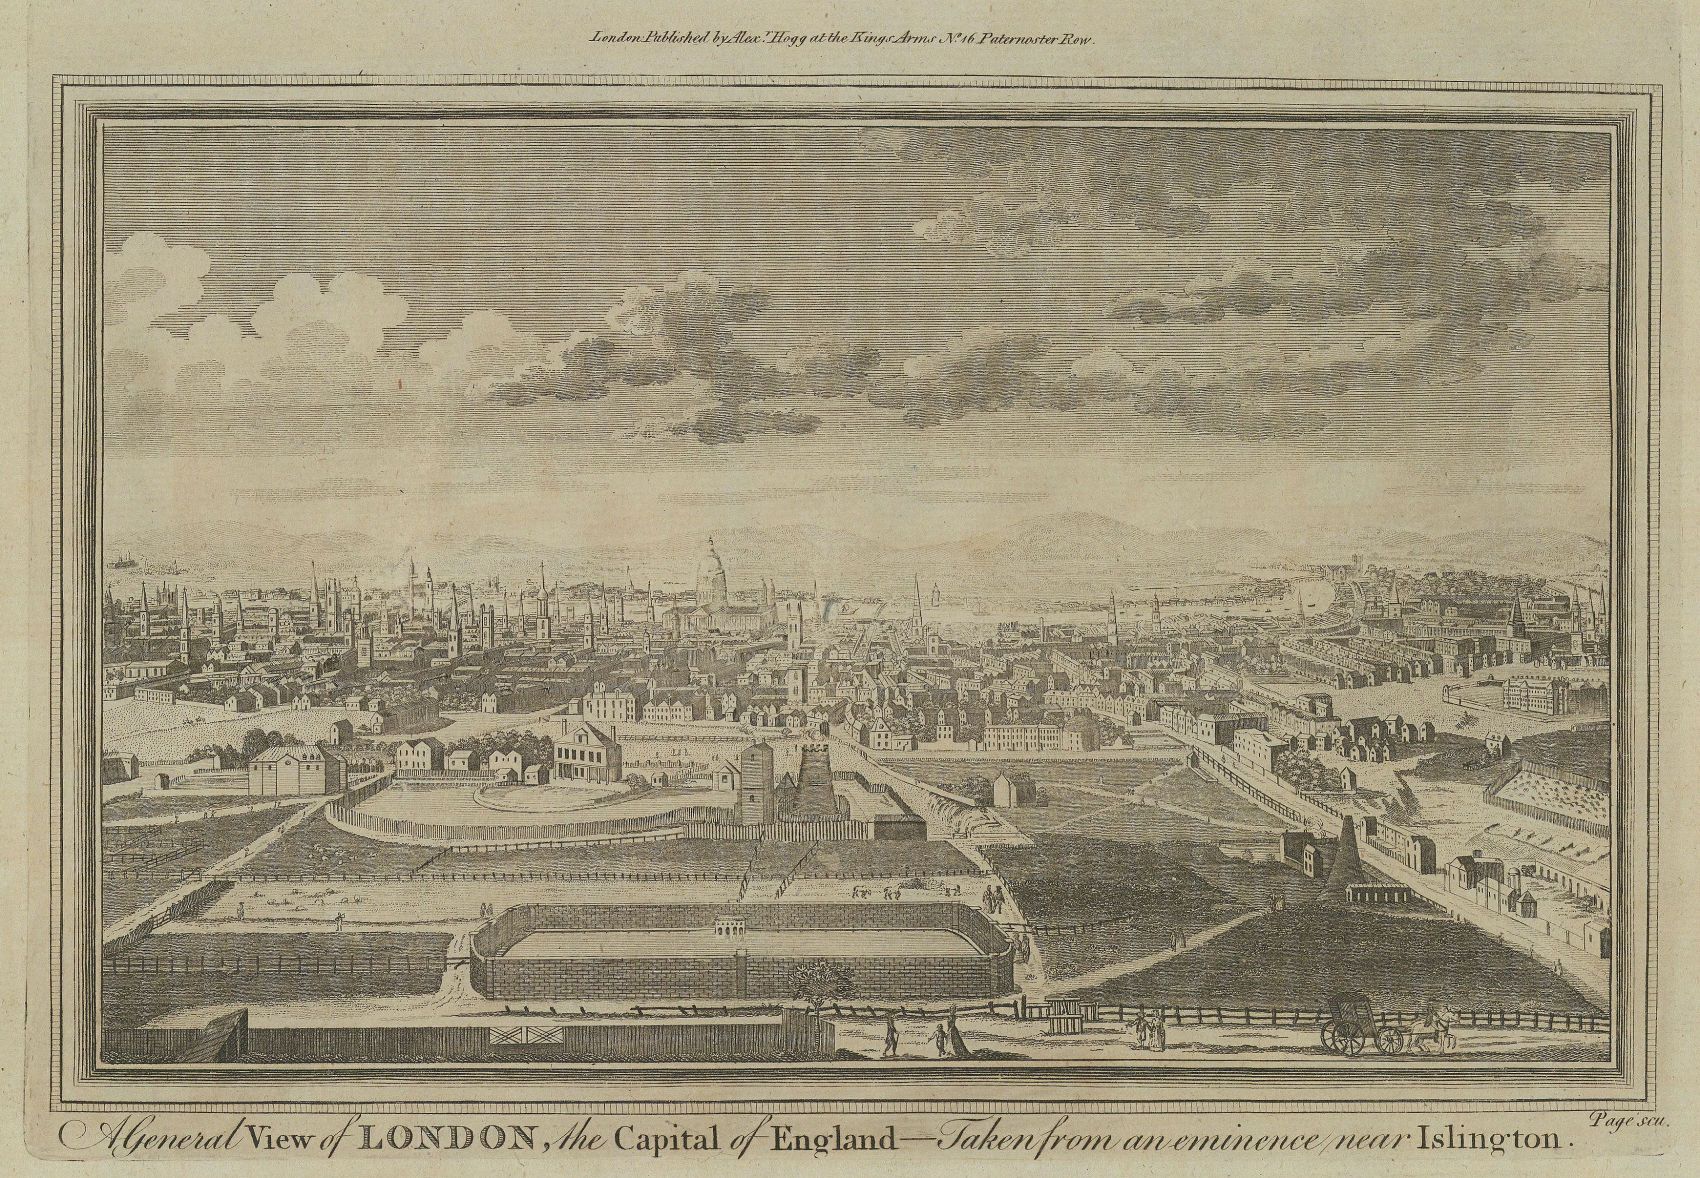 Associate Product A general view of London… taken from an eminence near Islington. THORNTON 1784